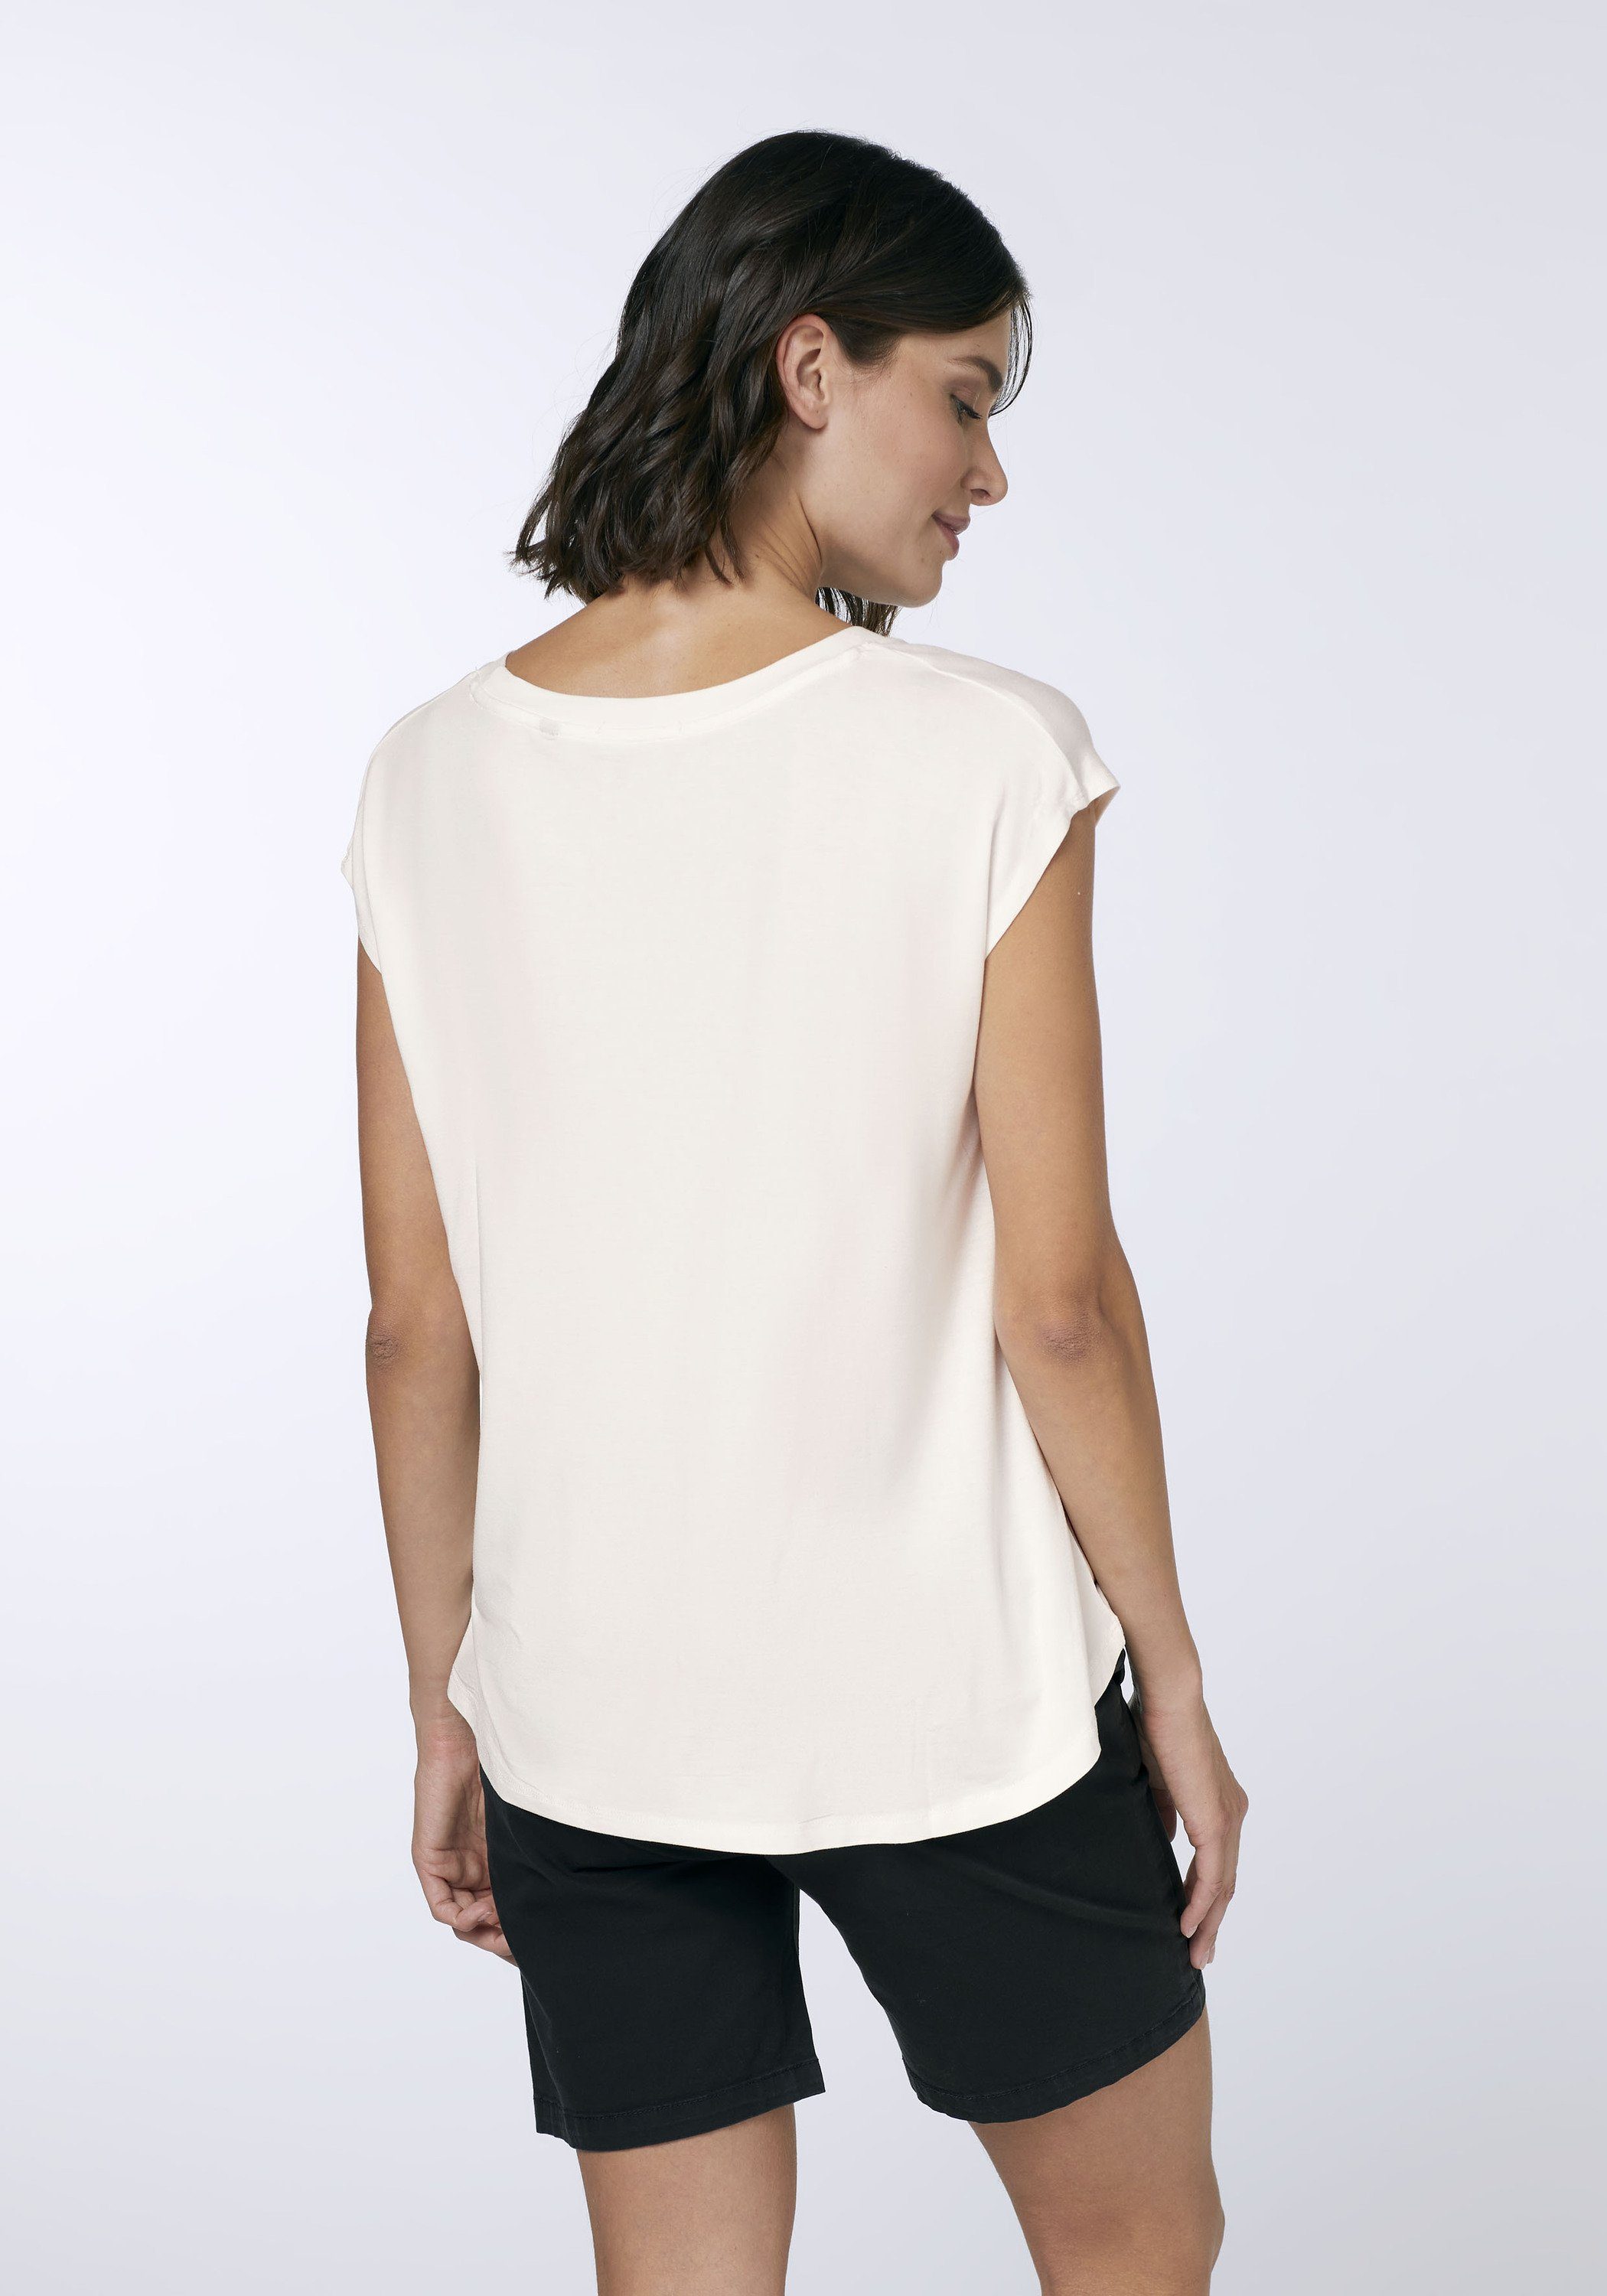 Chiemsee Viskose-Elasthanmix mit White T-Shirt Print-Shirt Star 1 aus Labelprint